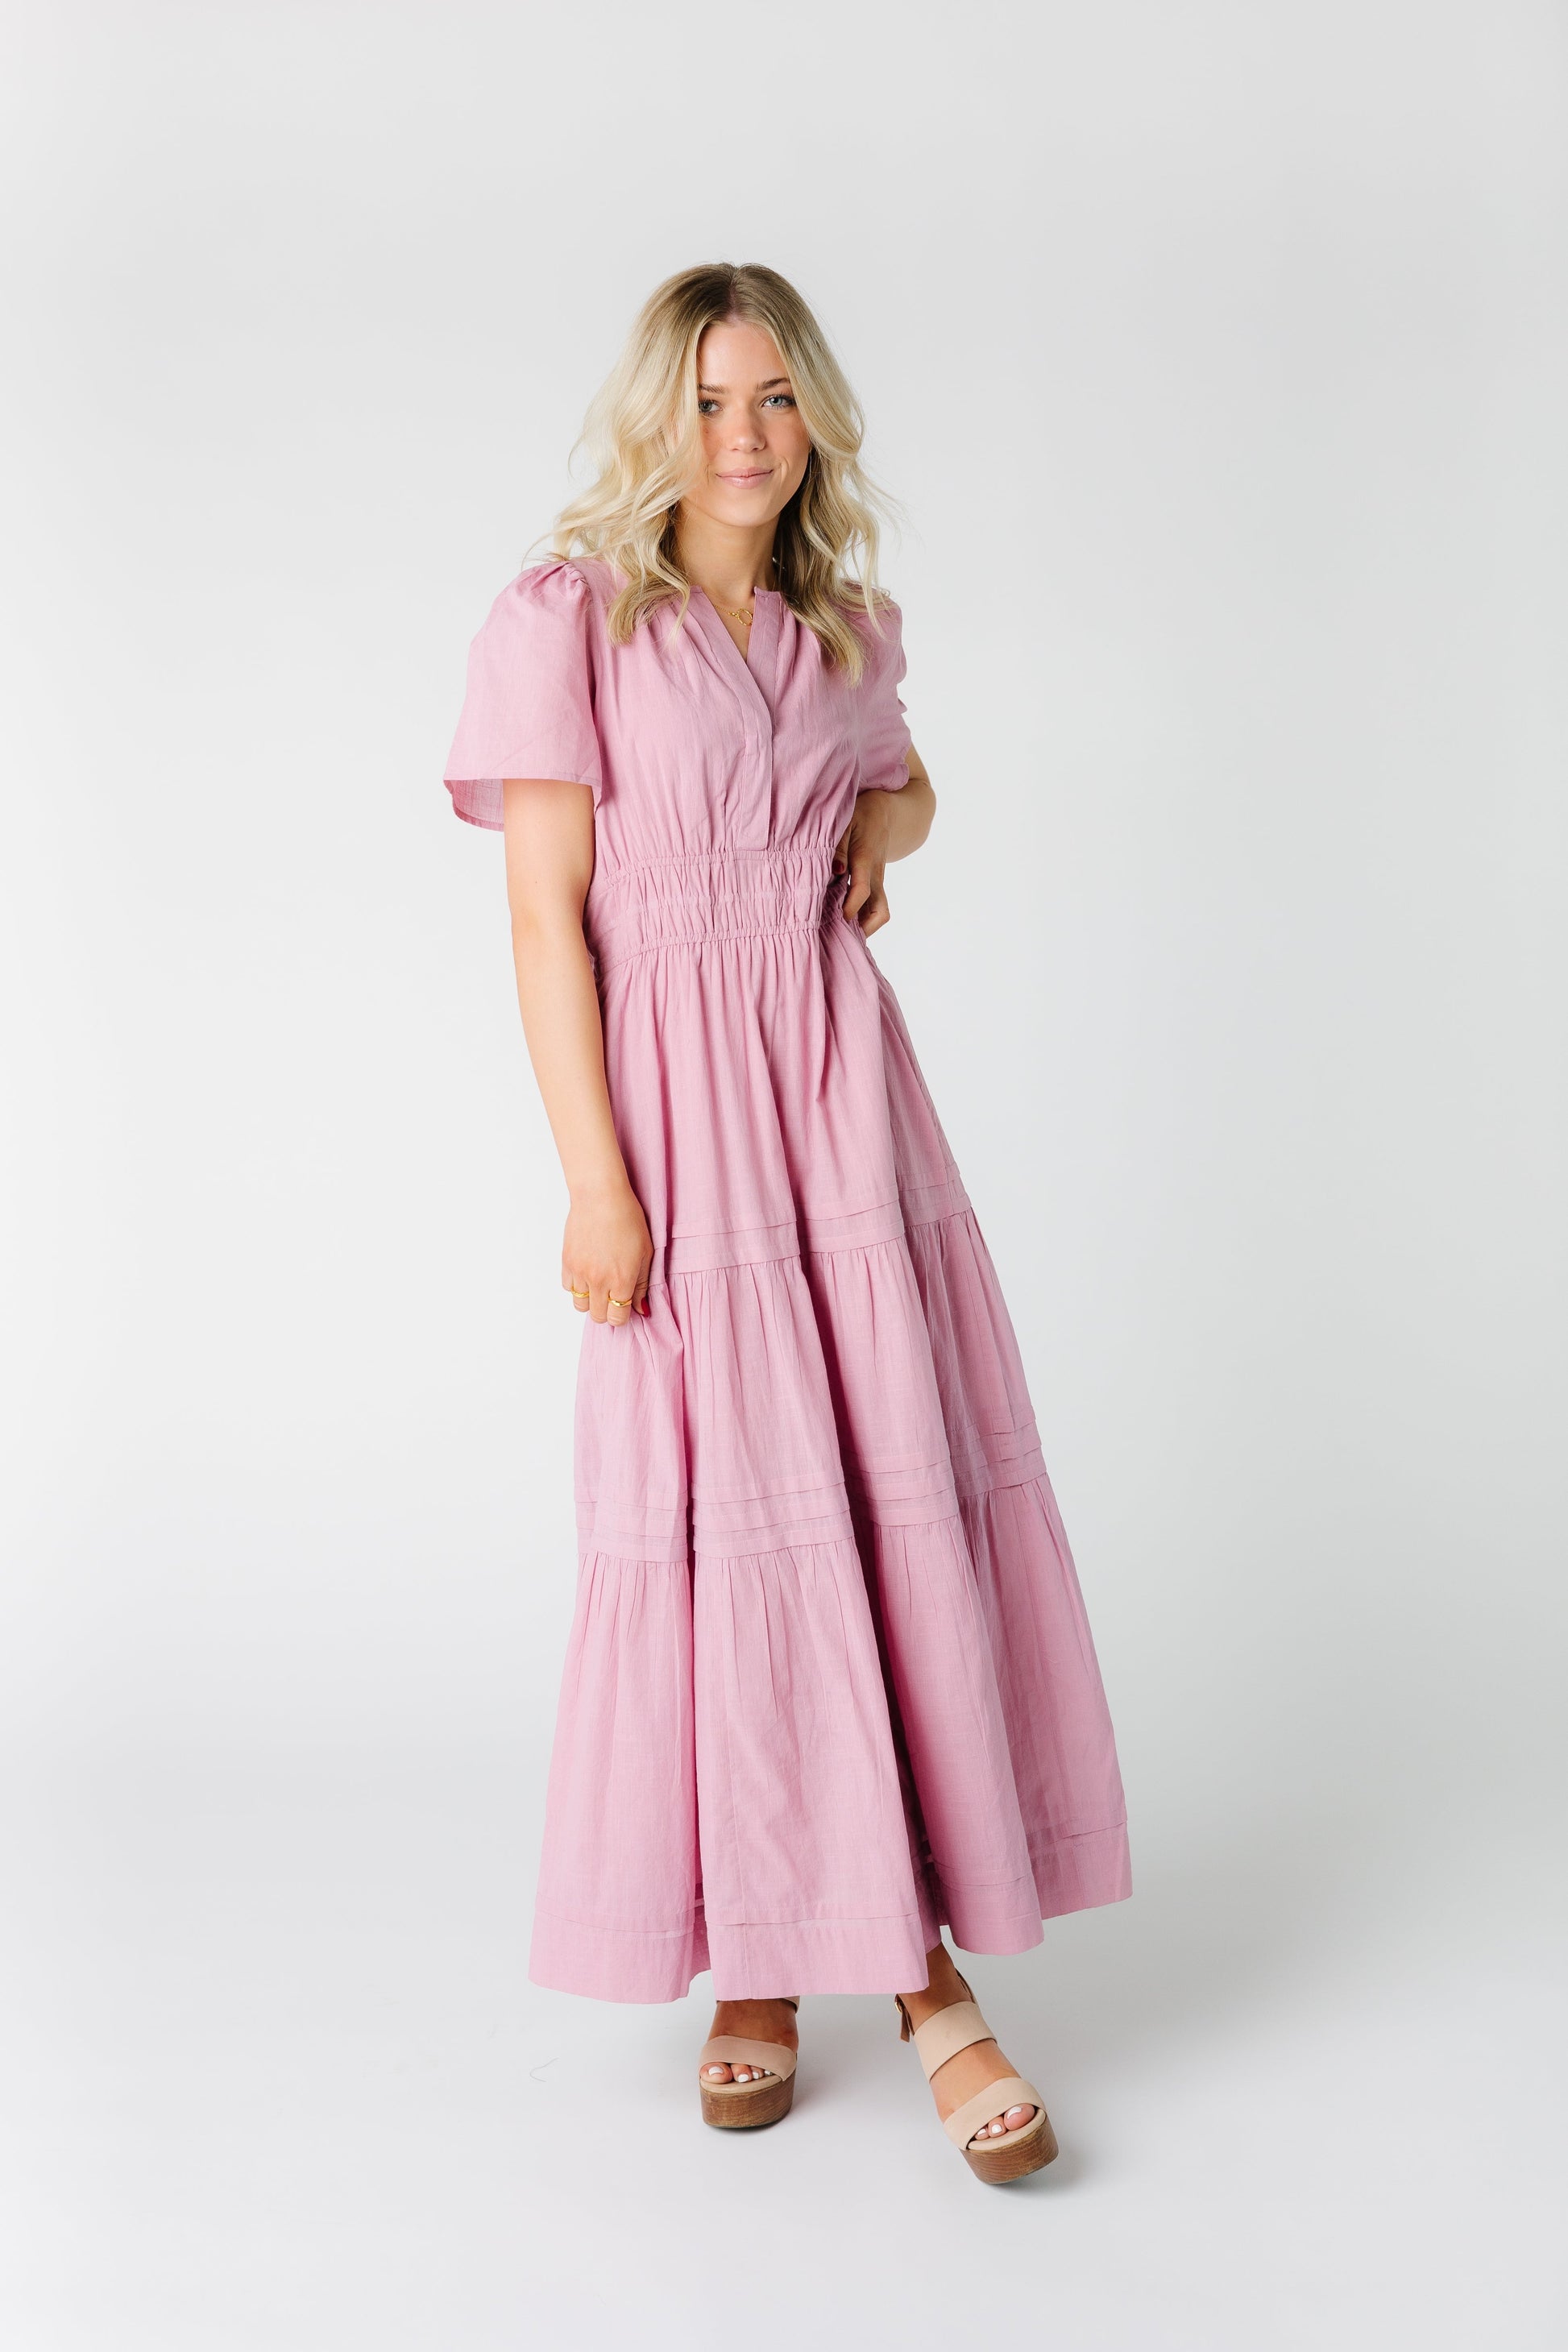 Citrus- Shae Dress Spring WOMEN'S DRESS Citrus Pink XS 